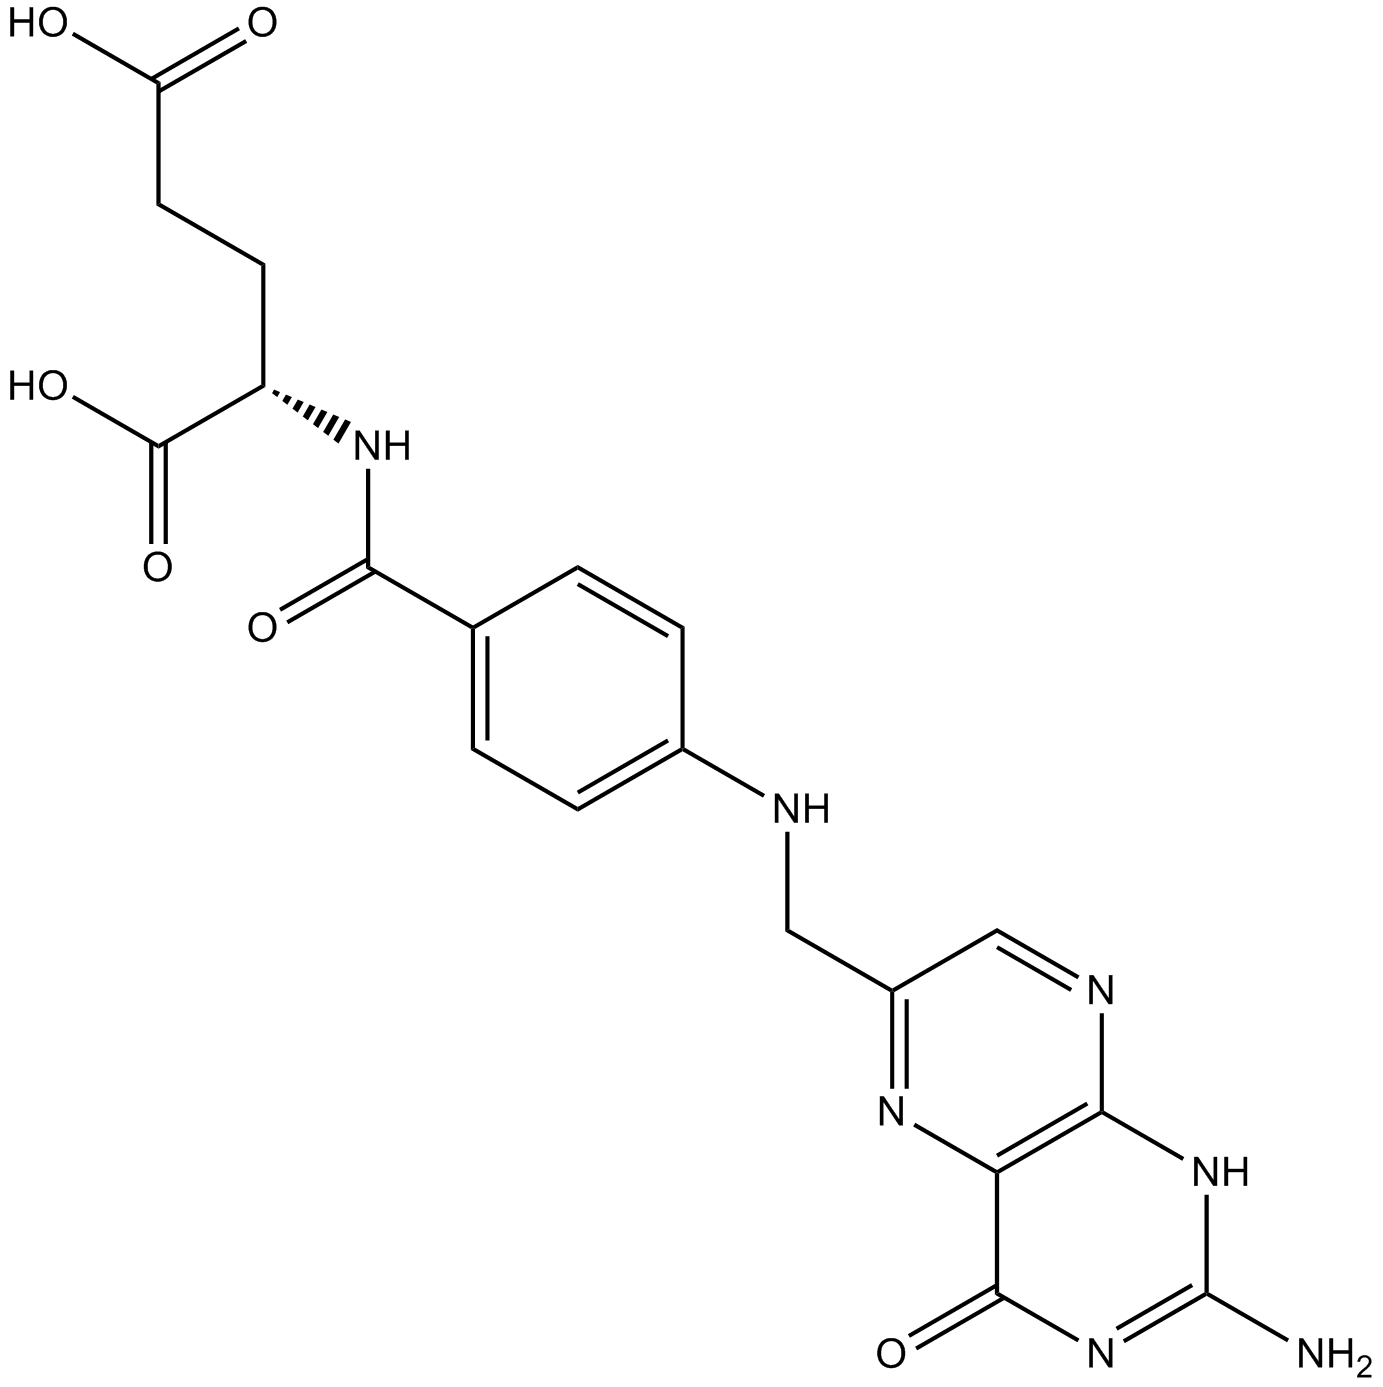 Folic acid Chemical Structure